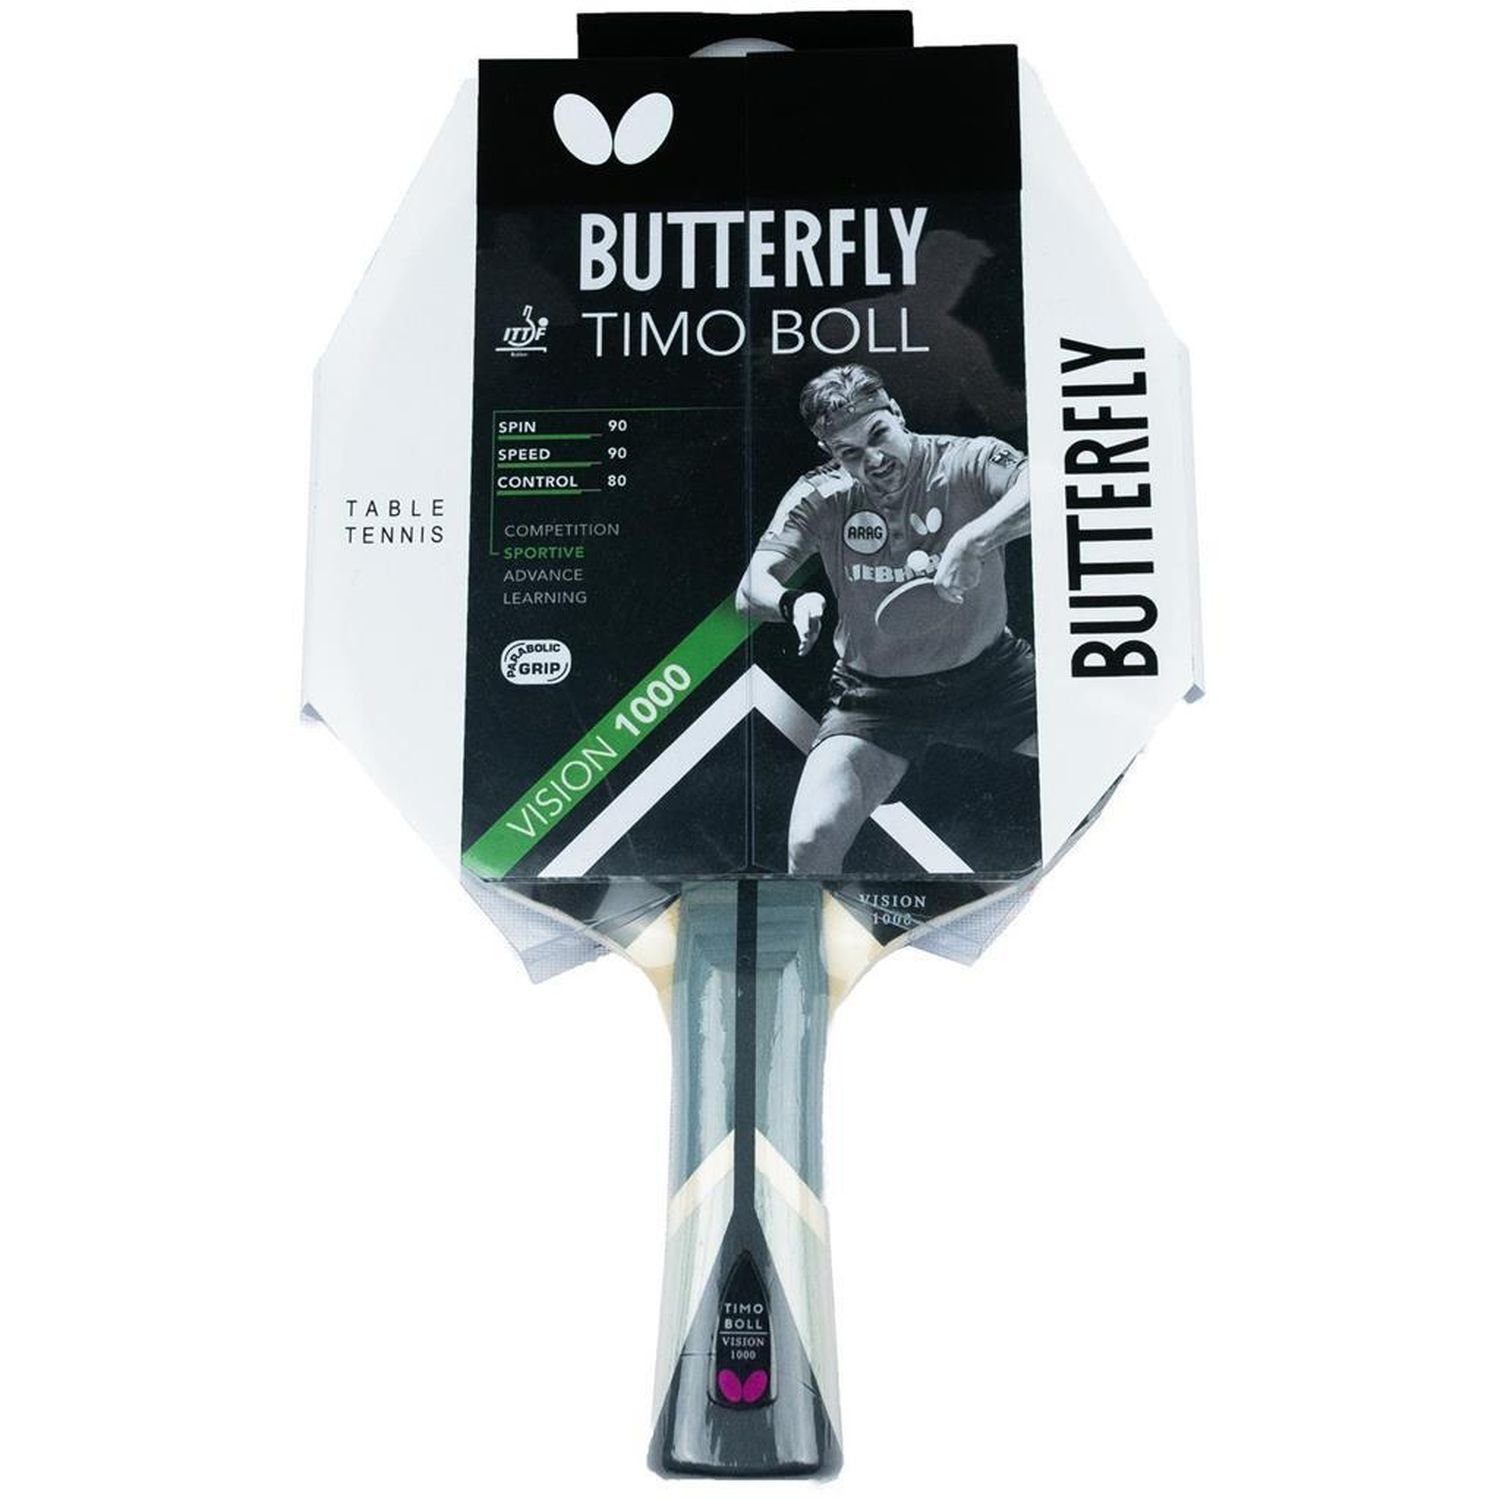 Butterfly Tischtennisschläger 1x Timo Boll Tennis Drive Racket Tischtennis + + Set Case Bat Vision 1 Tischtennisset Table Schläger Bälle, 1000